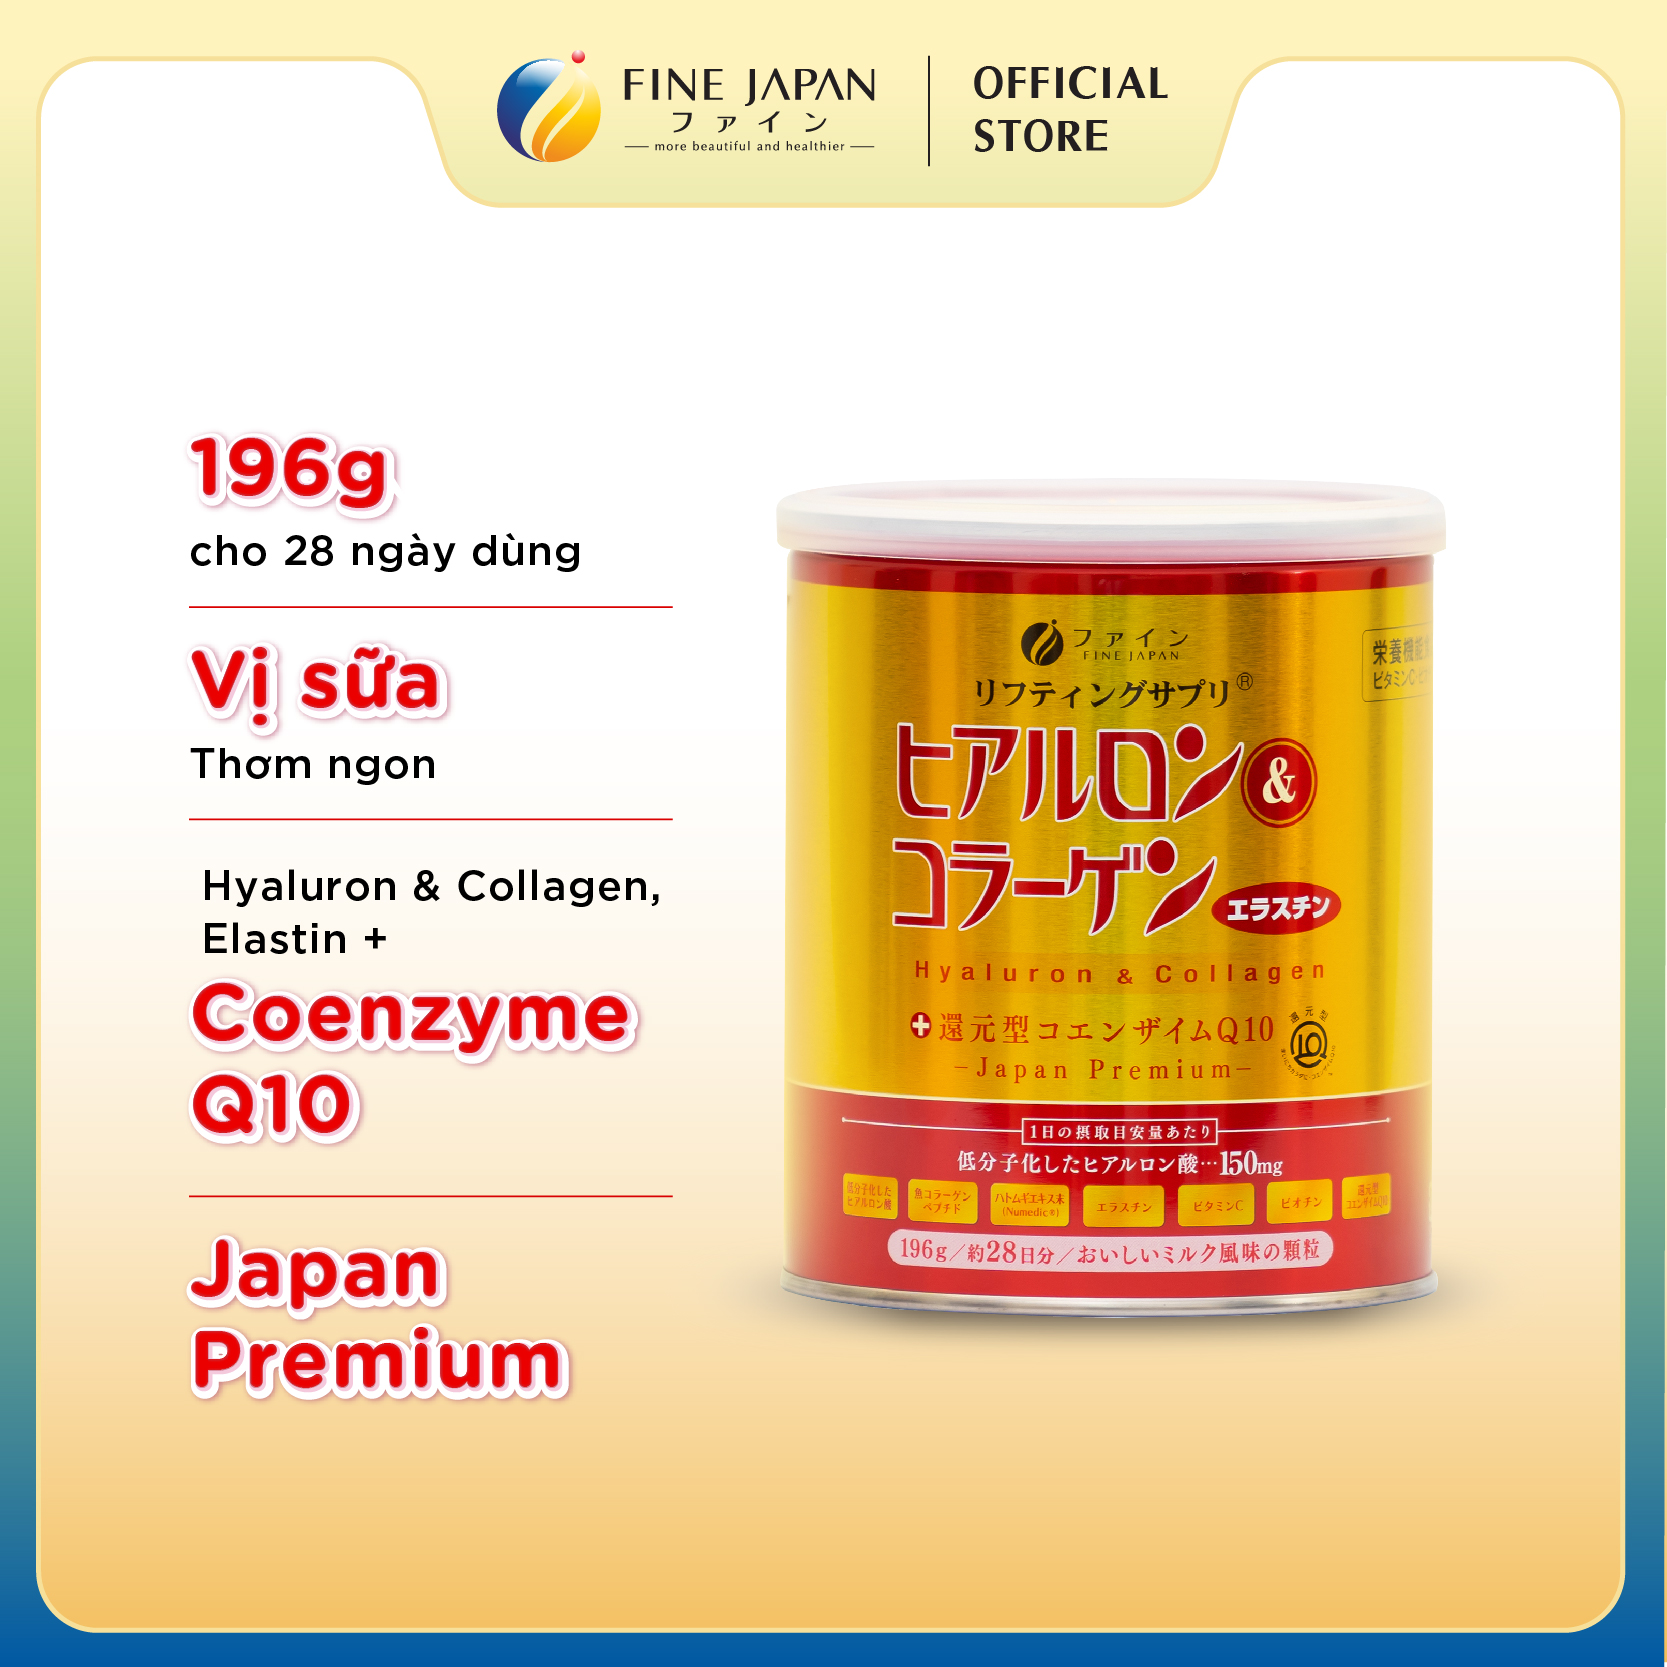 Bột uống Hyaluron & Collagen FINE JAPAN hạn chế lão hóa da